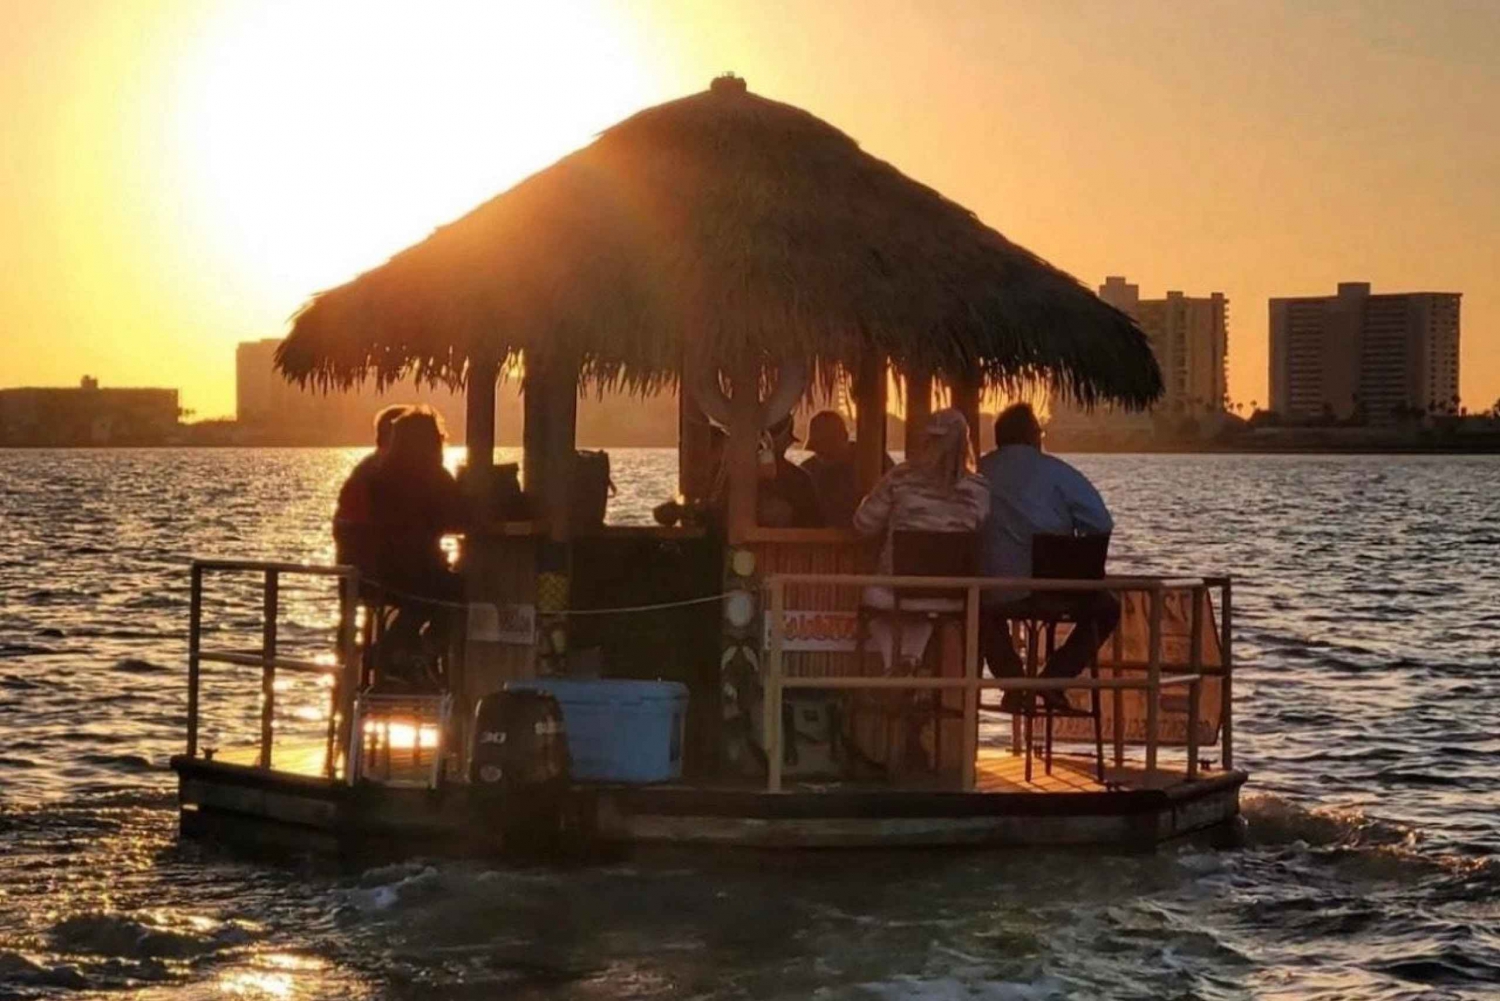 Cruisin' Tikis Clearwater: Sunset Cruise